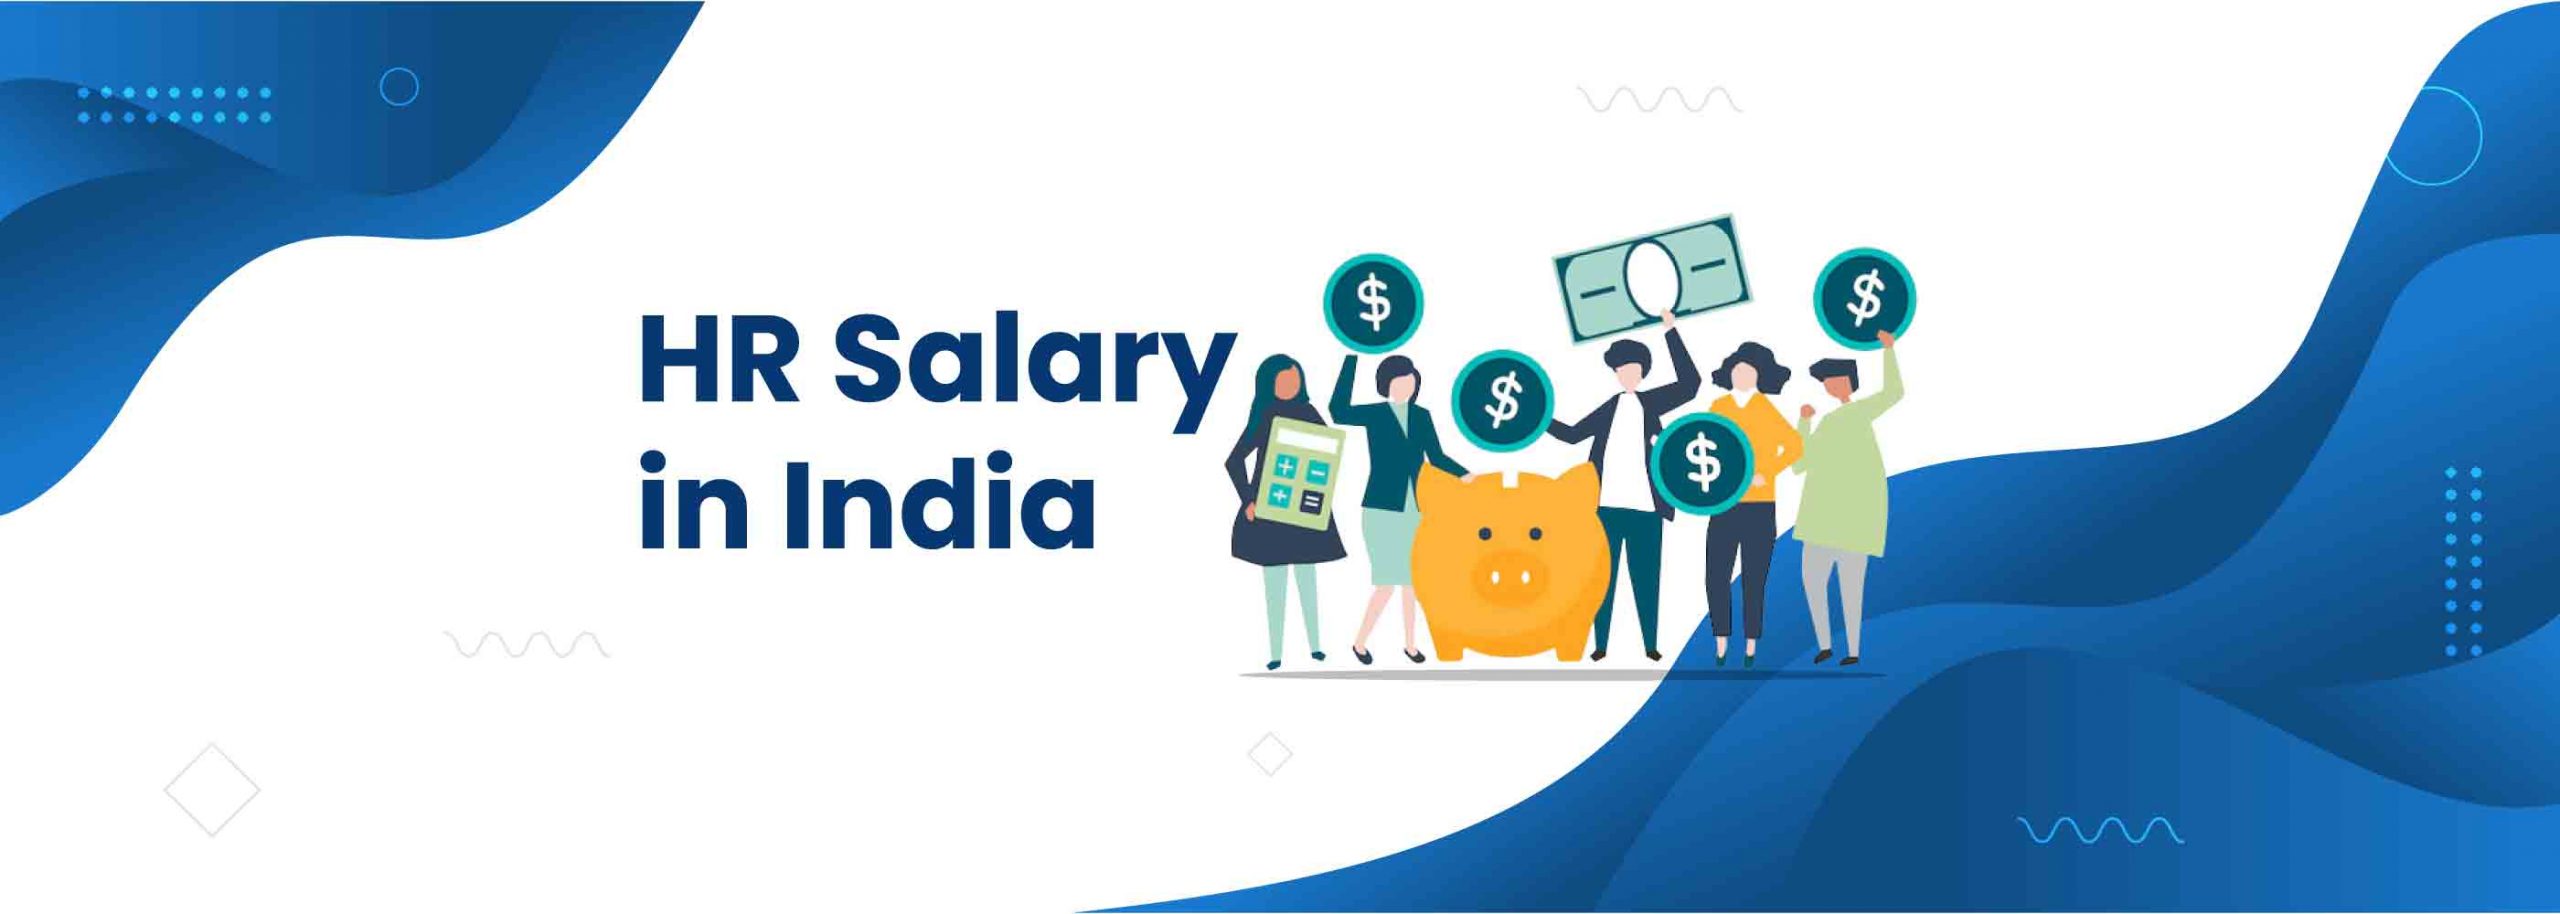 HR Salary in India